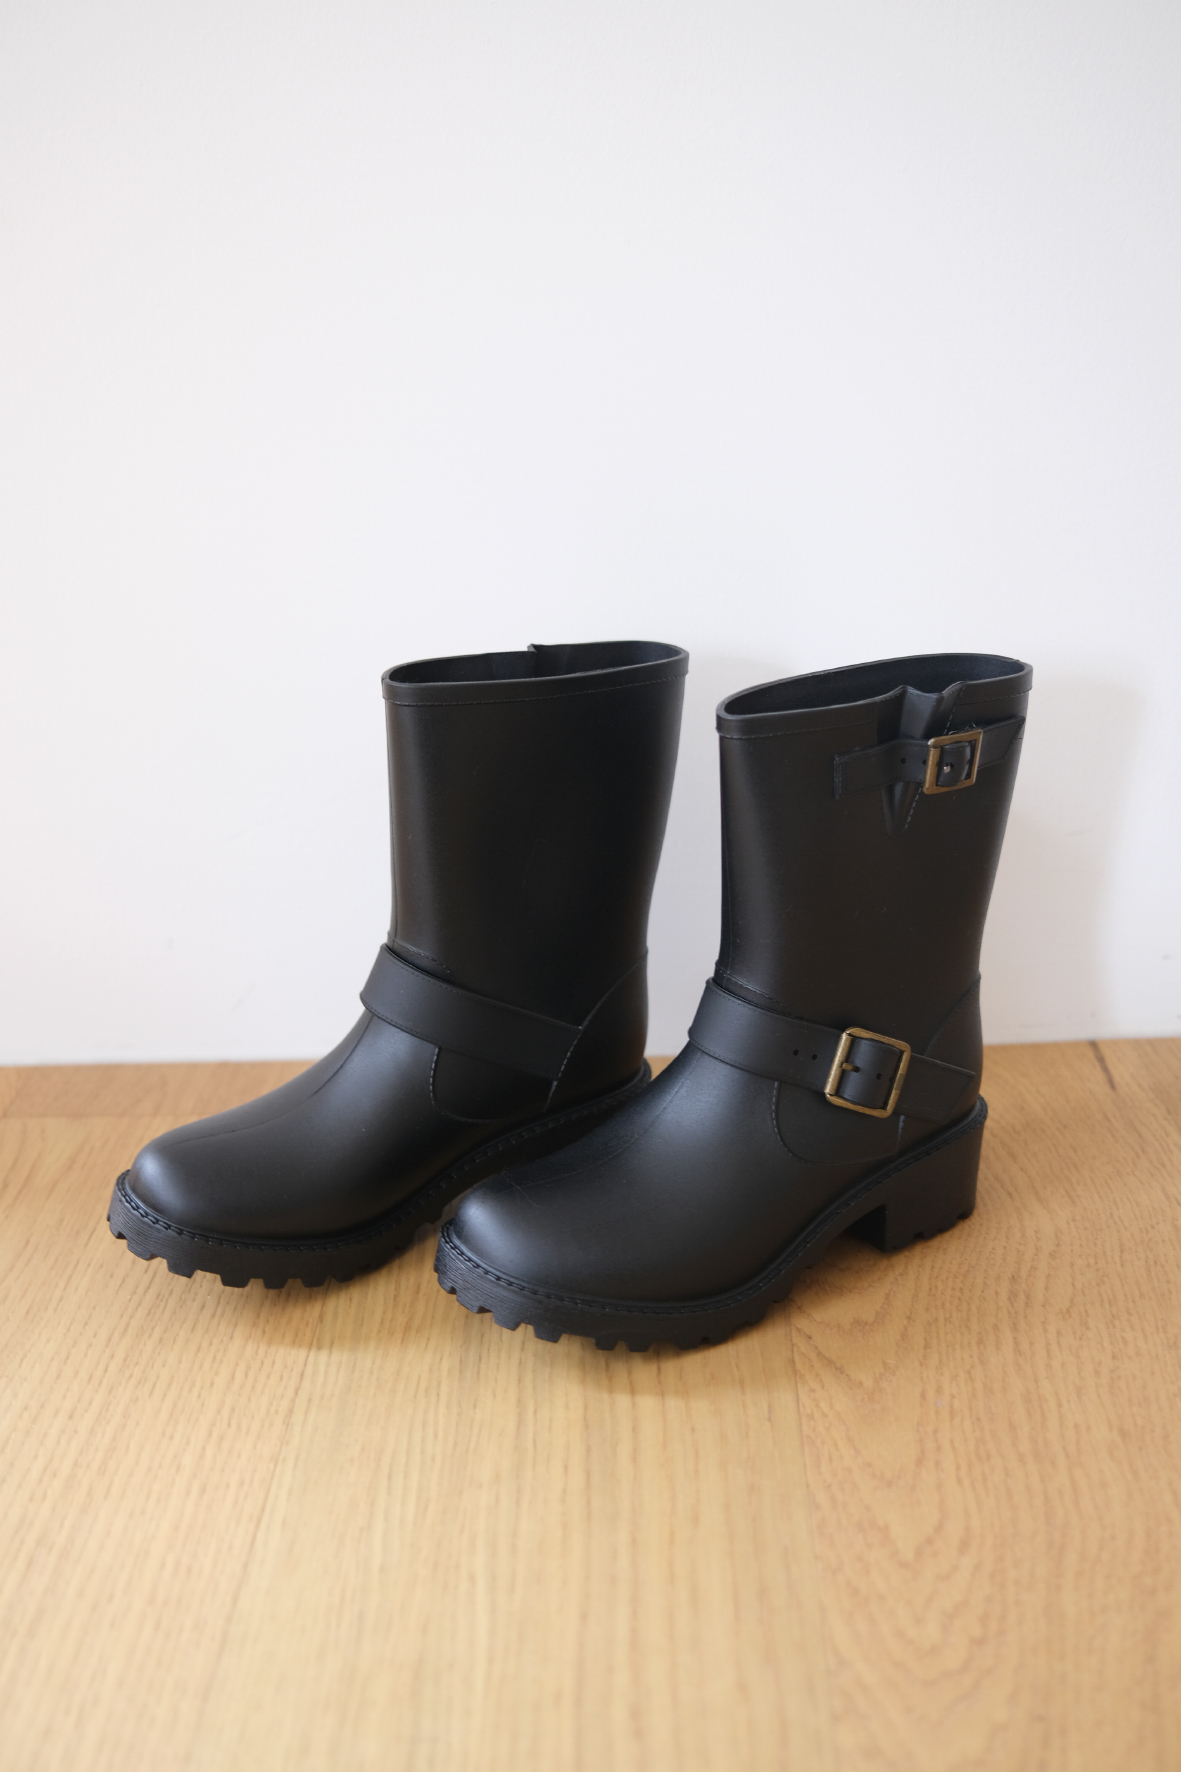 Buckle half rain boots